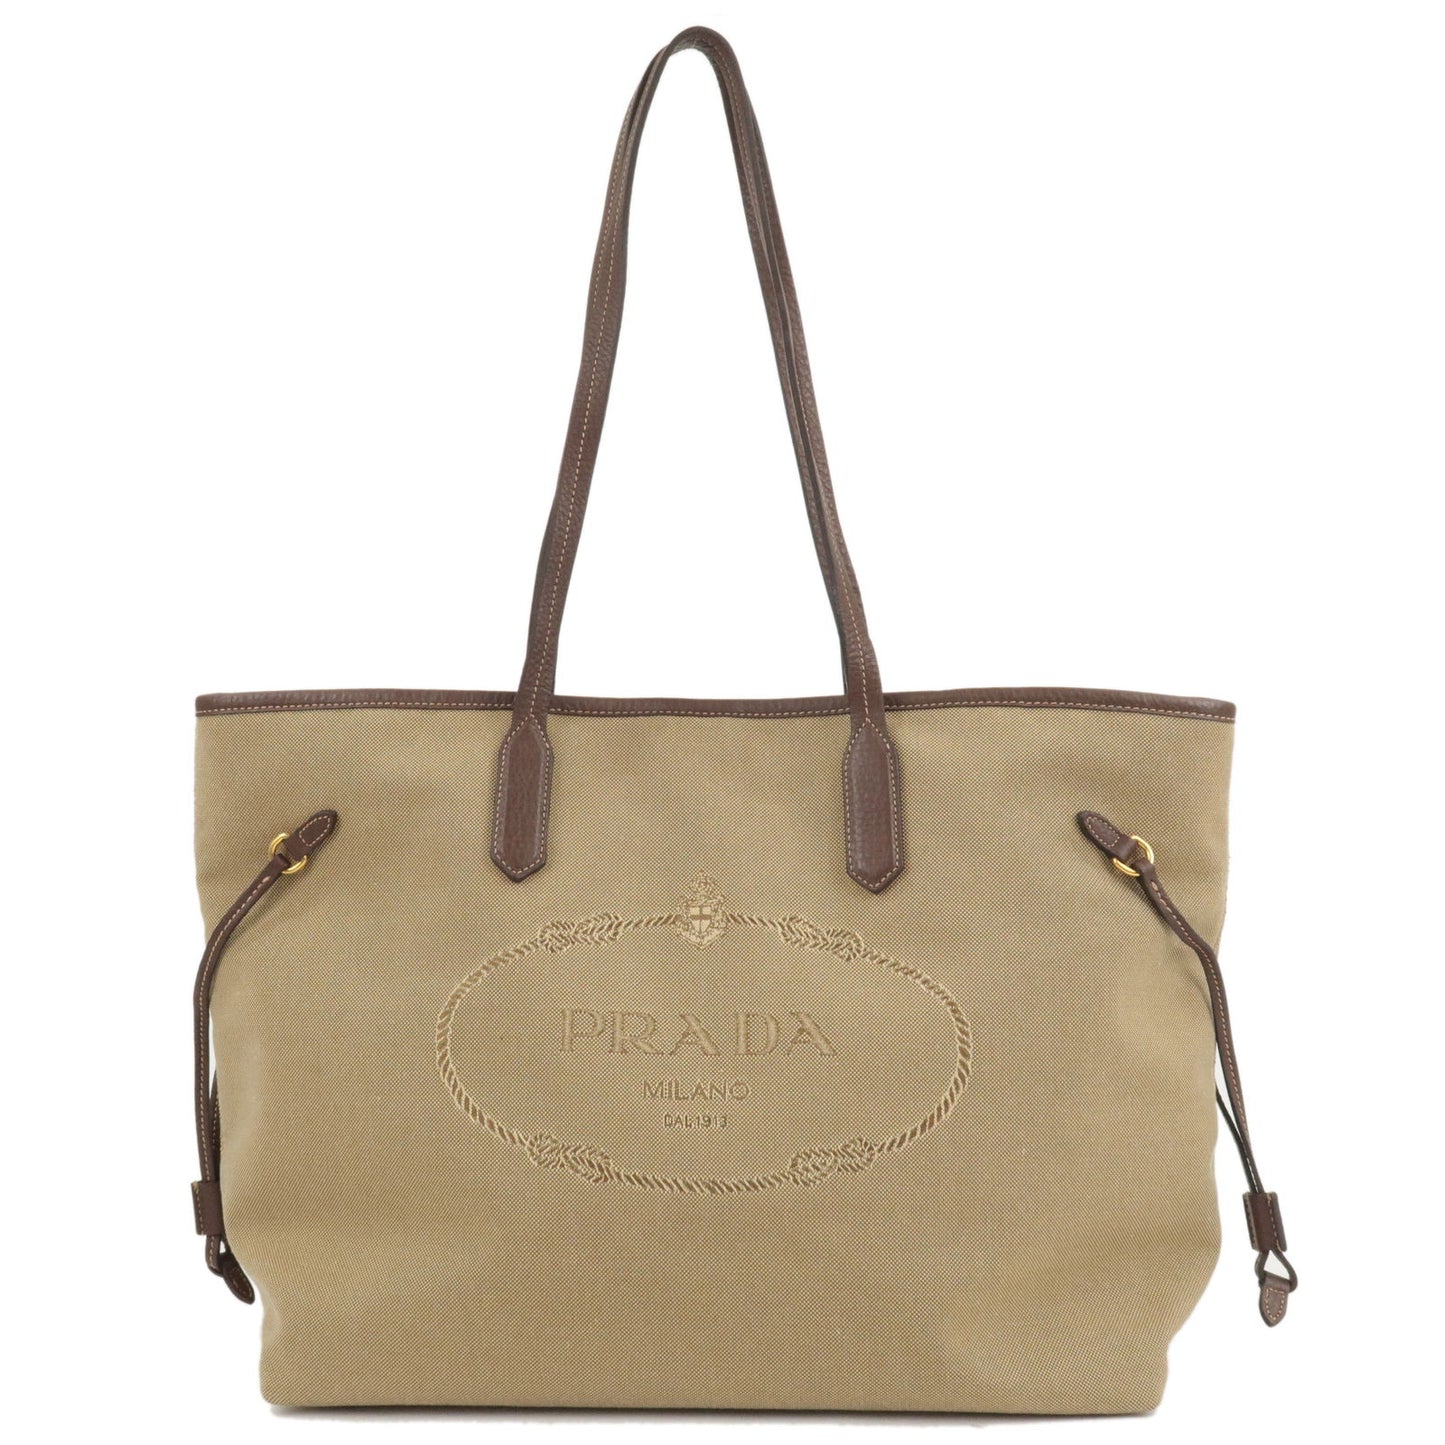 PRADA-Logo-Jacquard-Leather-Tote-Bag-Hand-Bag-Beige-Brown